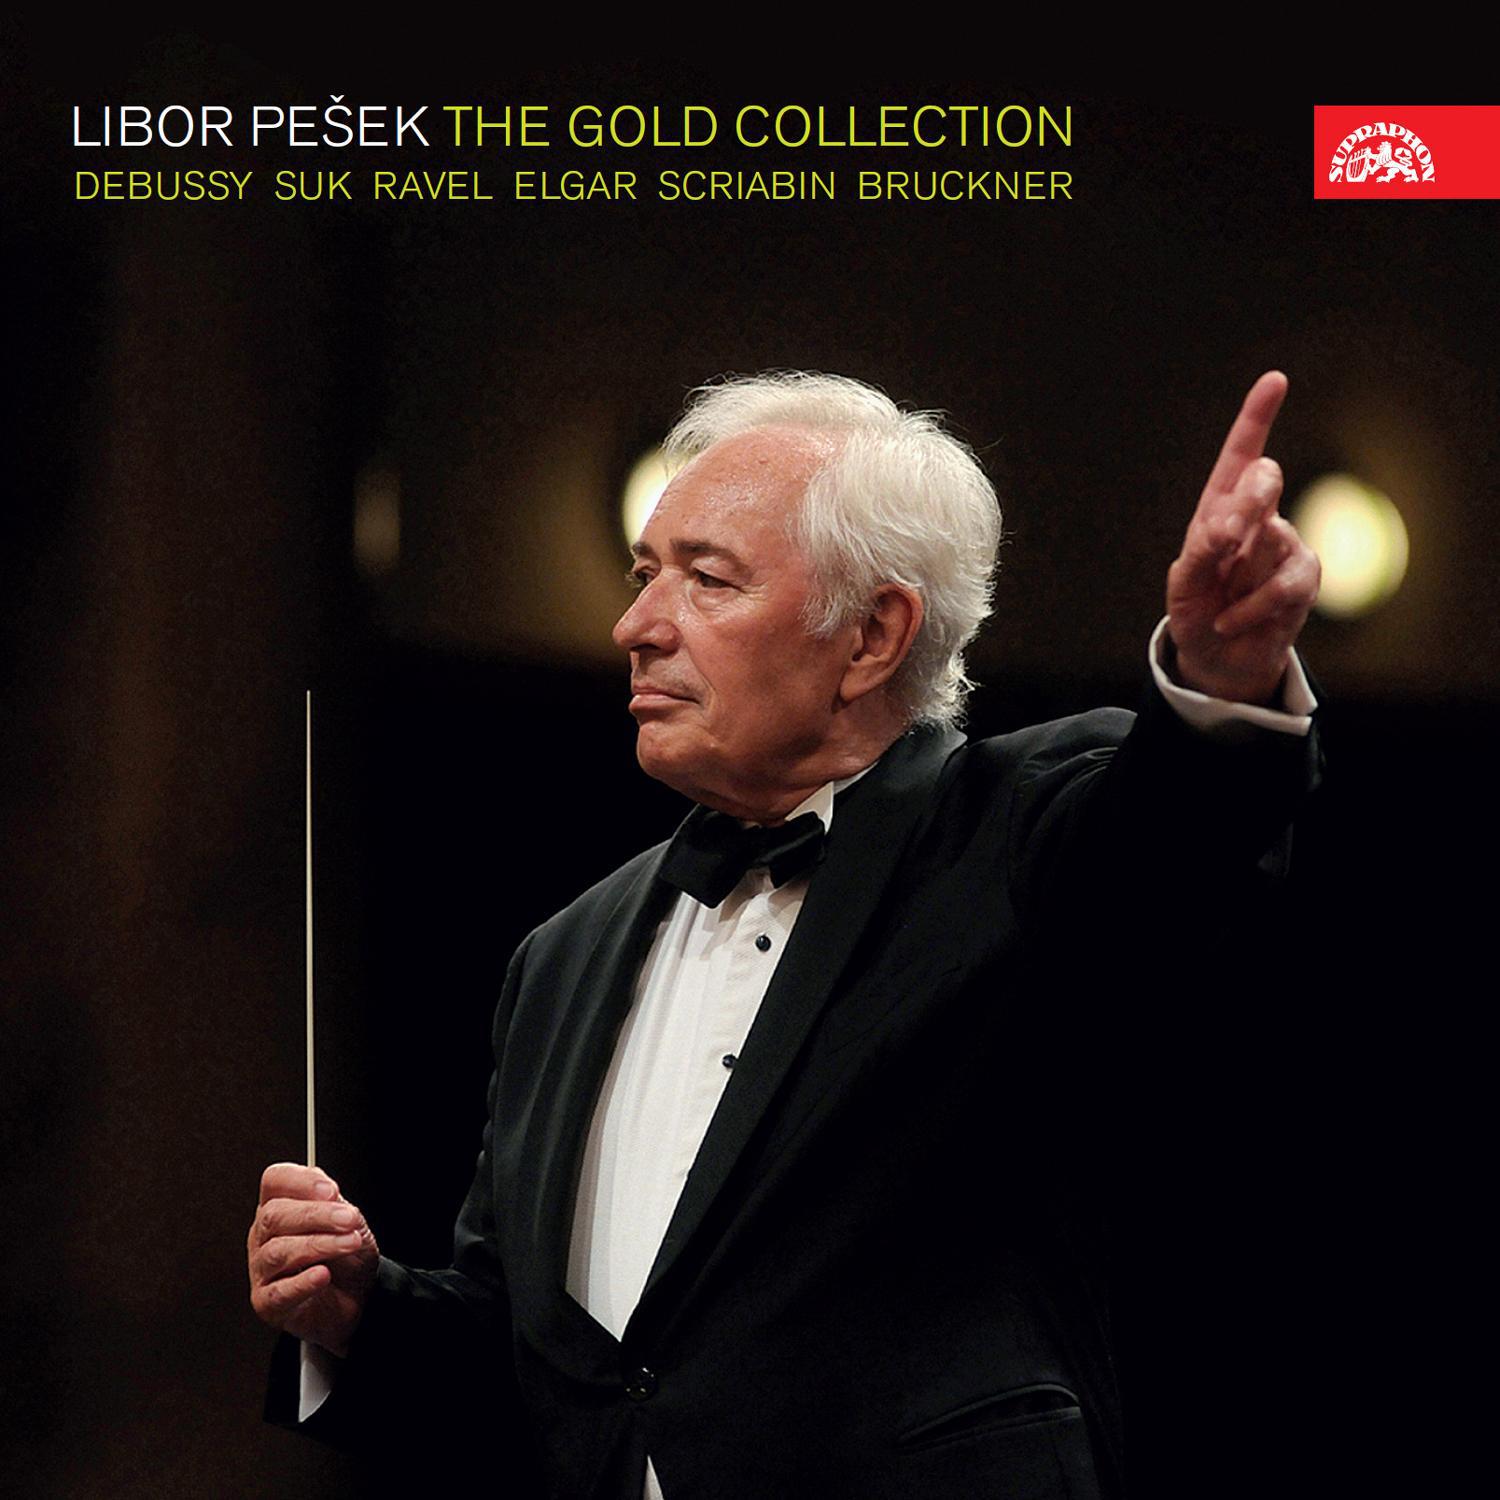 Libor Pešek - The Gold Collection / Debussy, Suk, Ravel, Elgar, Skrjabin, Bruckner